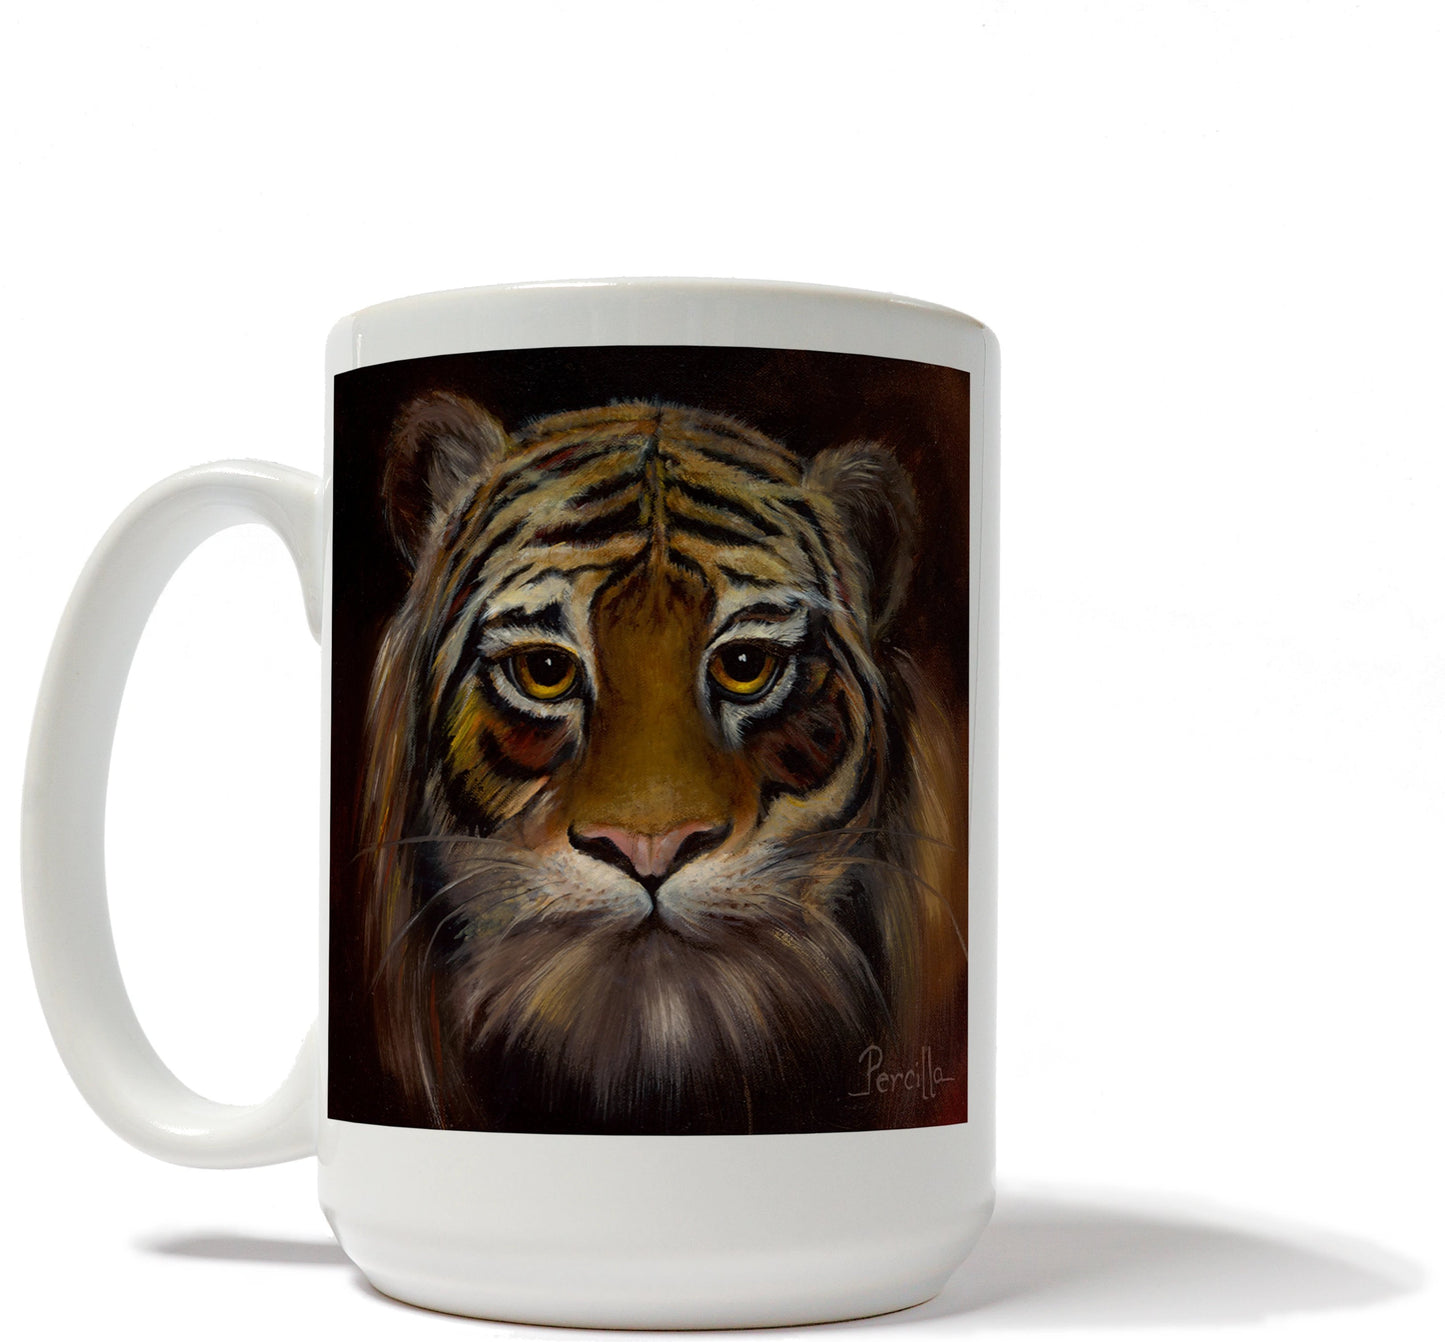 Tiger Mug By Perscilla Penner